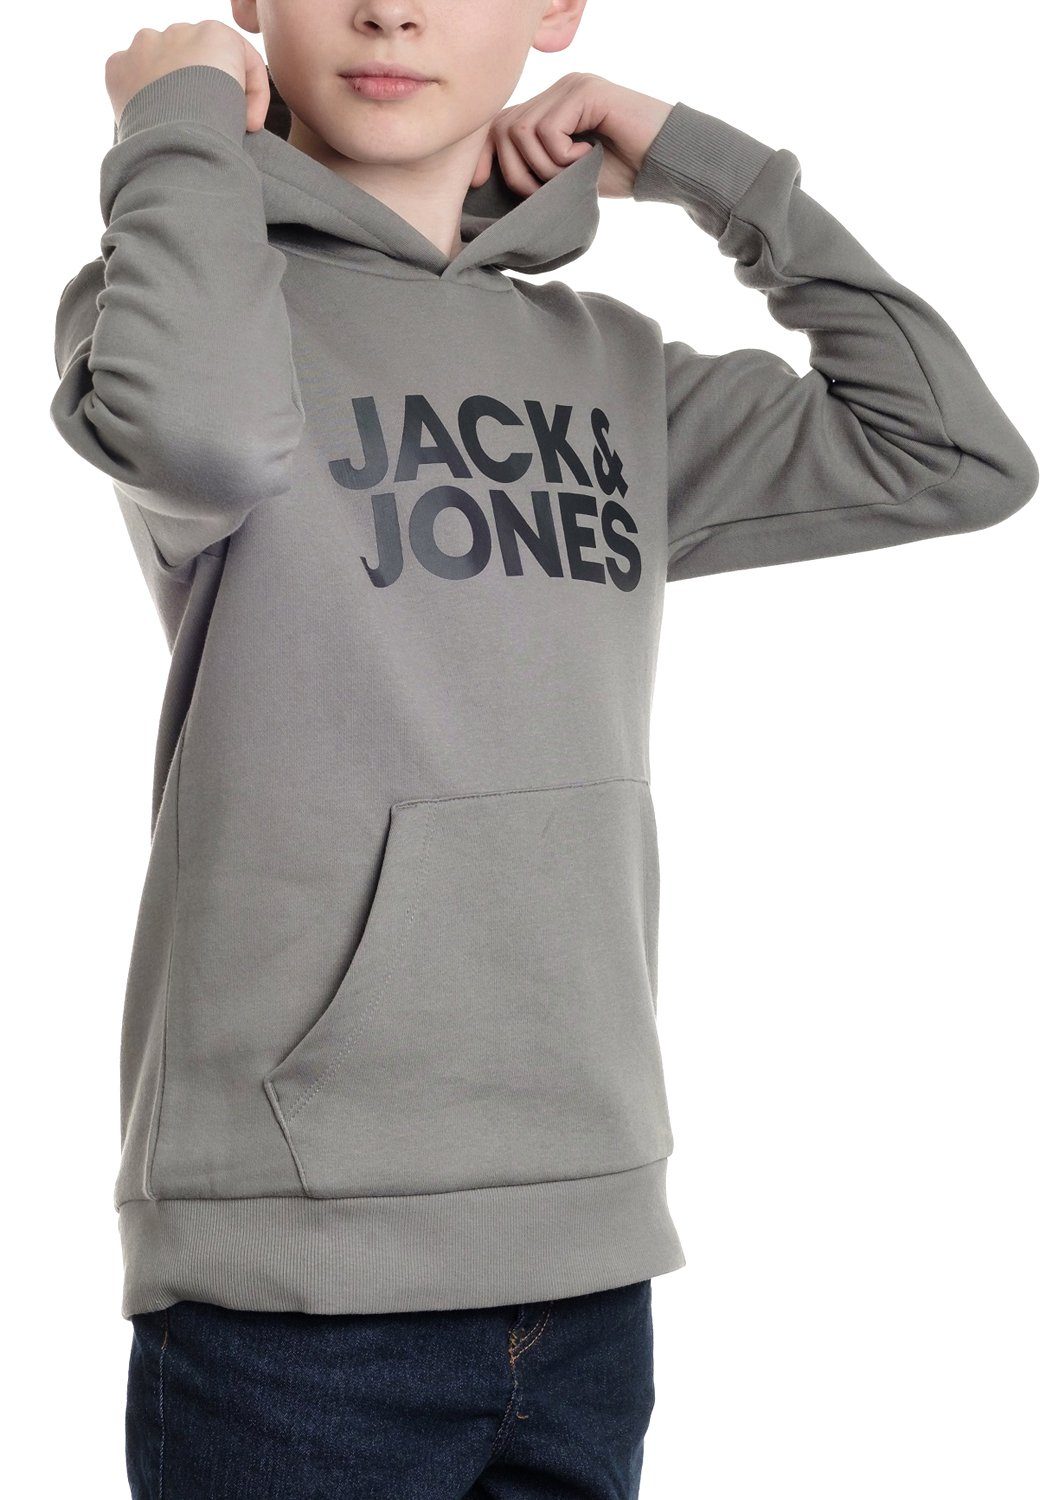 & Jones Jack Junior Sedona-Black Kapuzenpullover Unifarbe